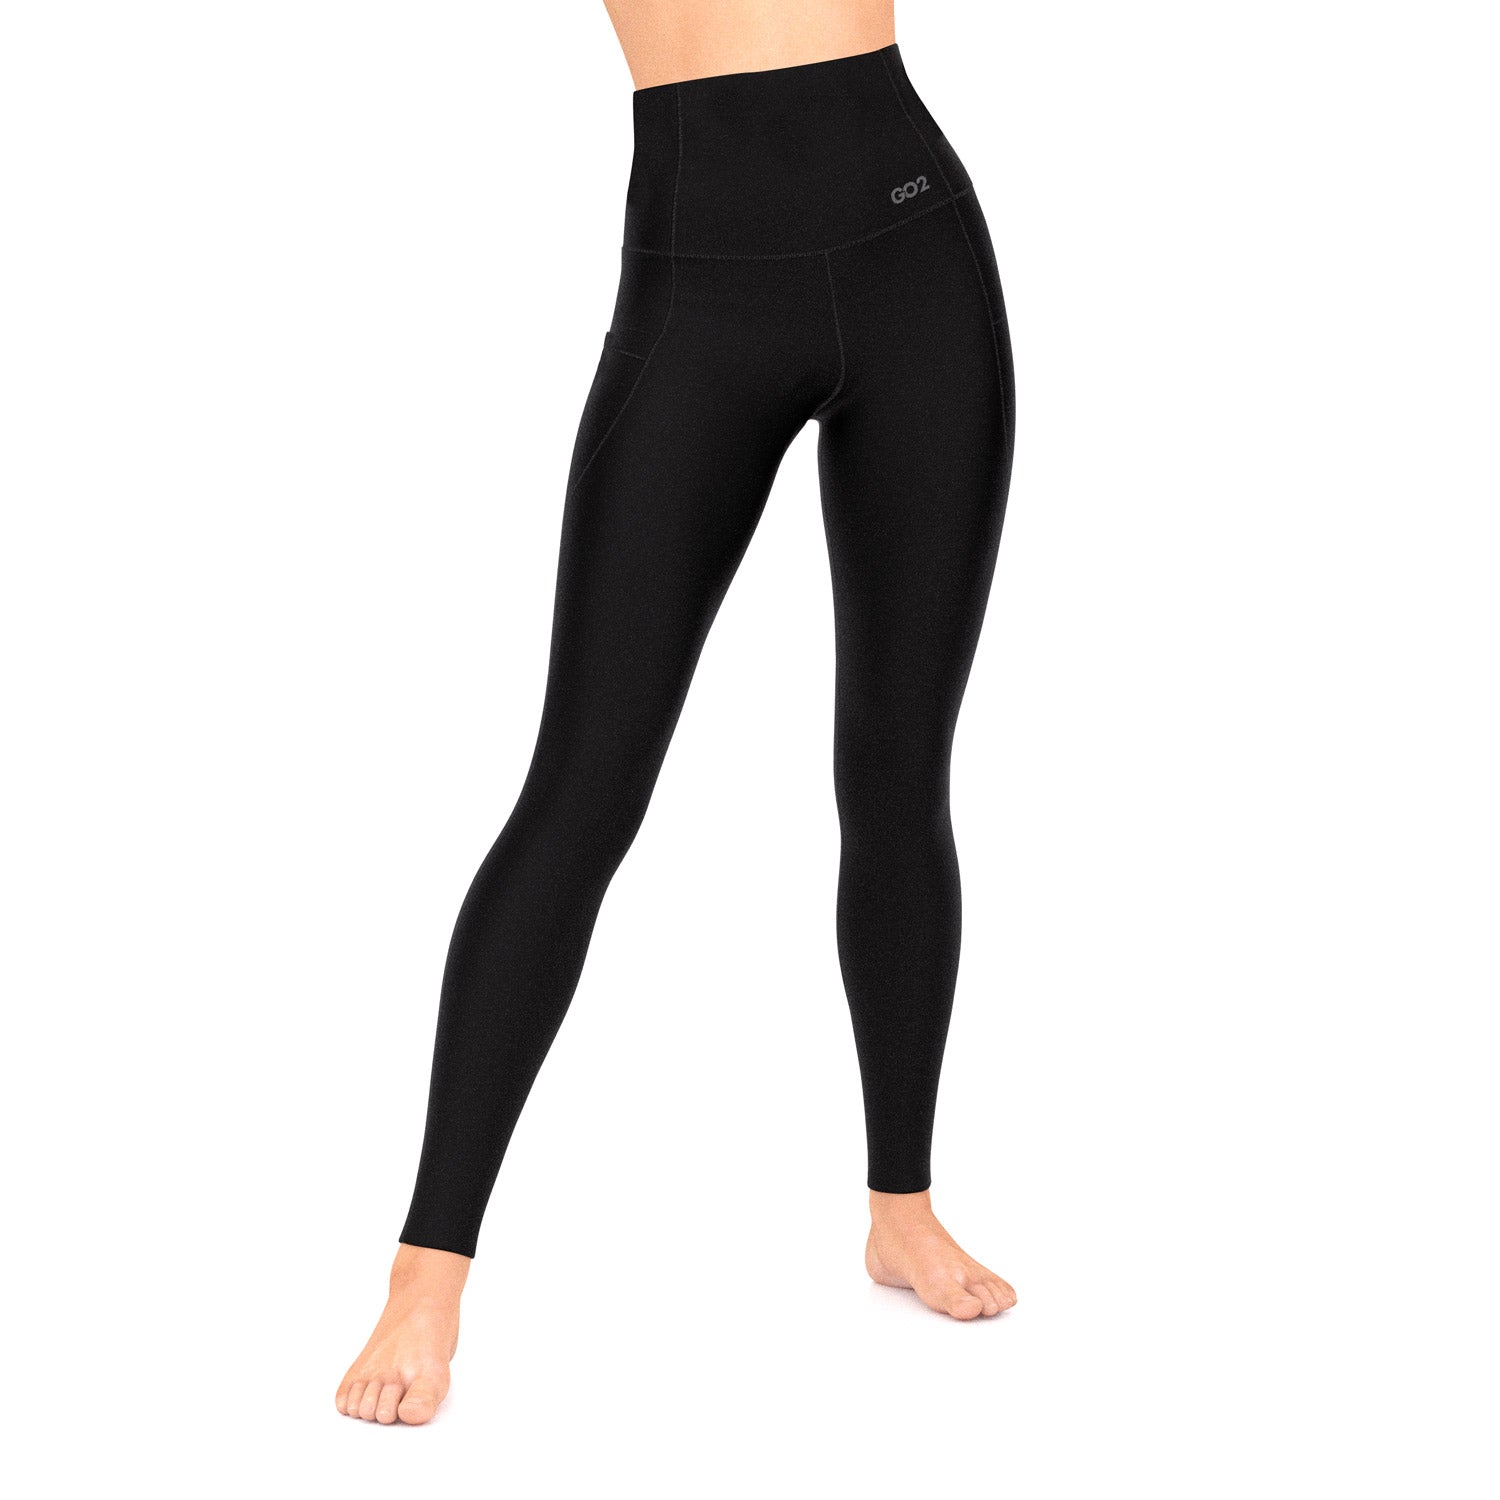 eczipvz Yoga Pants Women Full Length Yoga Leggings, Women's High Waisted  Workout Compression Pants XL,Black